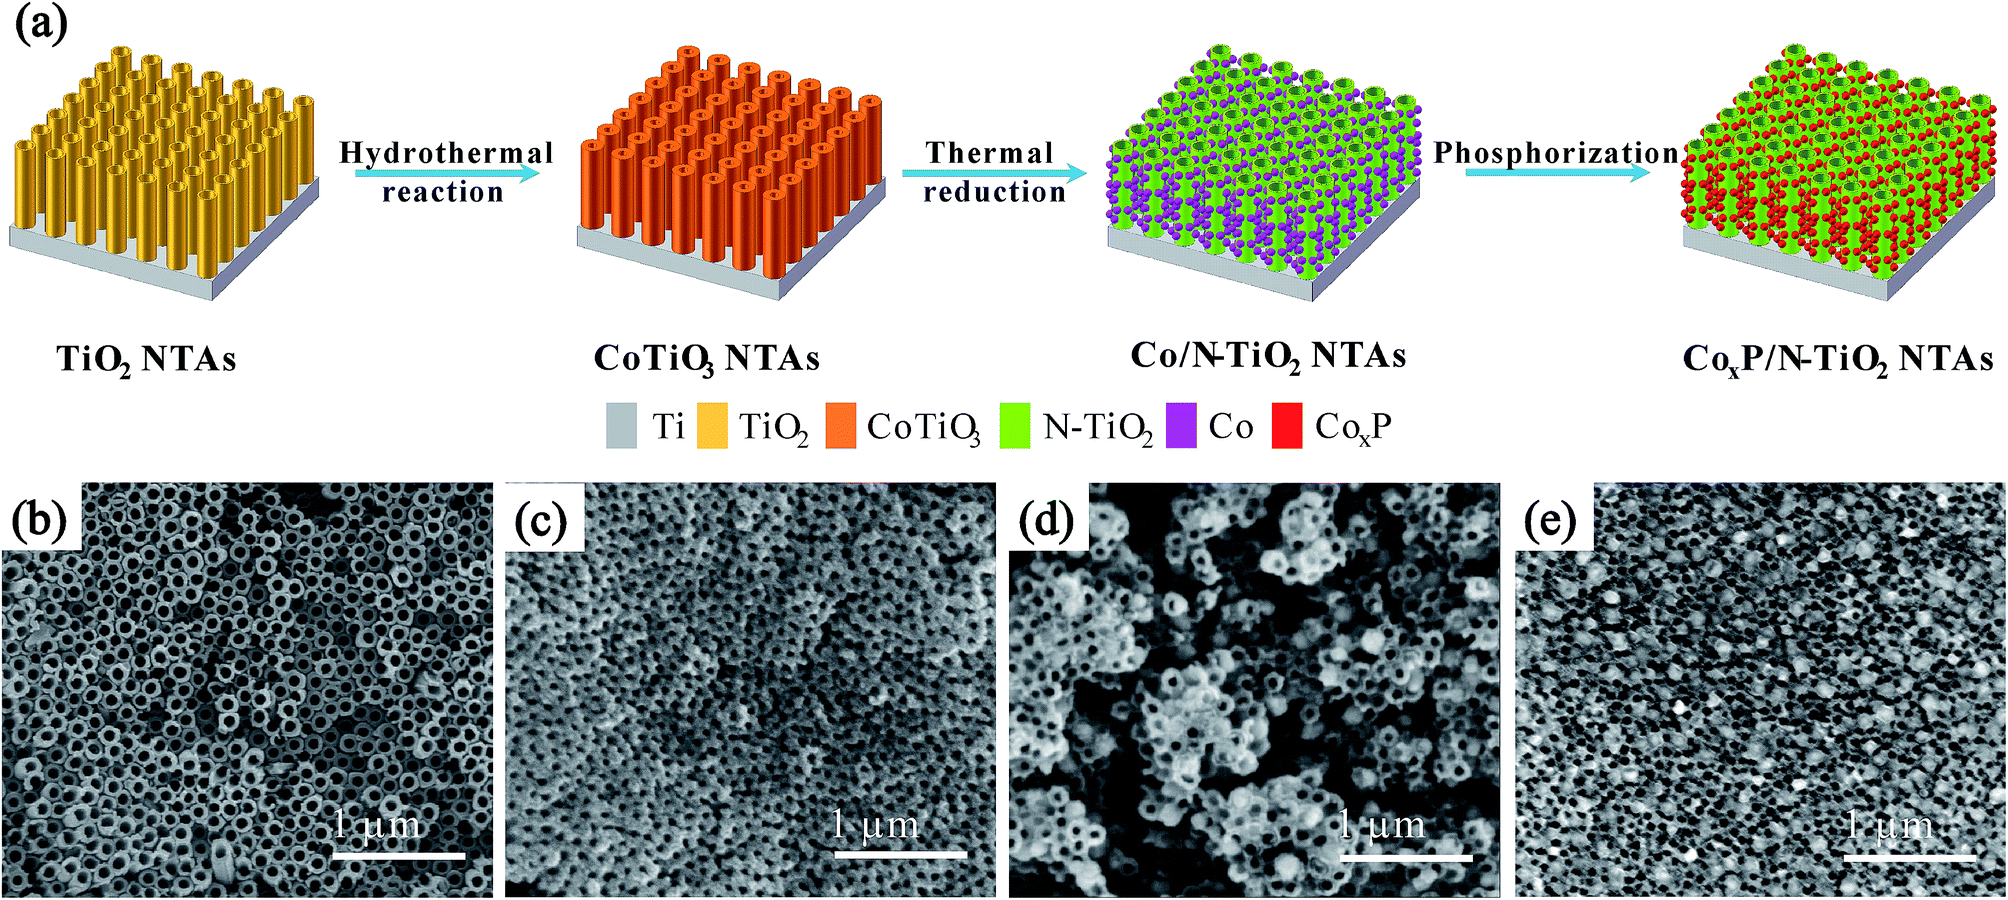 N Doped Tio 2 Nanotube Arrays With Uniformly Embedded Co X P Nanoparticles For High Efficiency Hydrogen Evolution Reaction Rsc Advances Rsc Publishing Doi 10 1039 C9raf